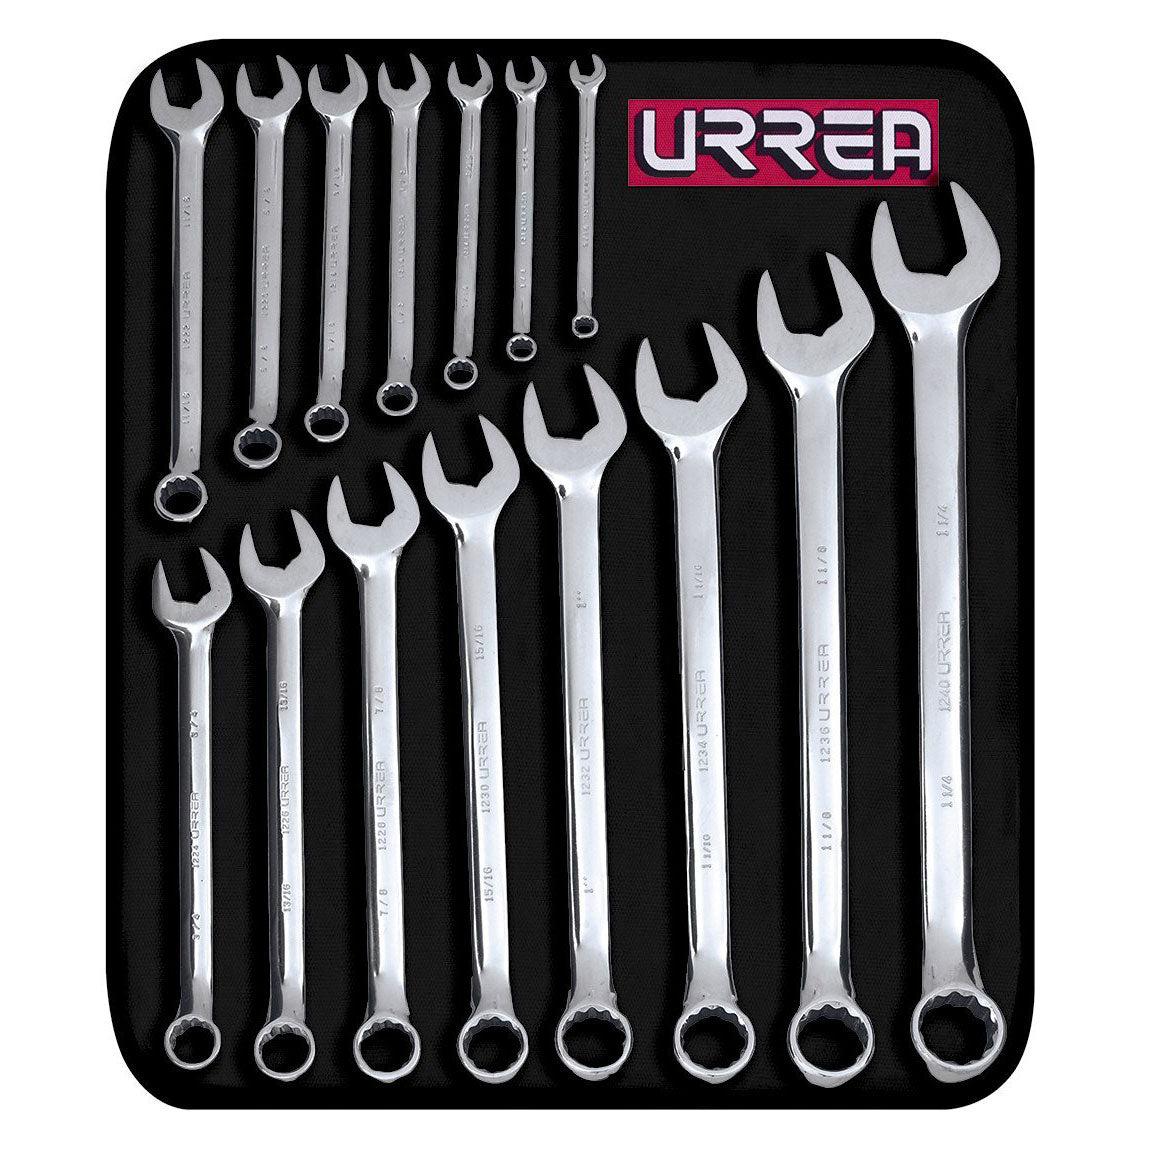 URREA 12-Point Chrome Combination Wrench Set (15 Pieces), 1200F